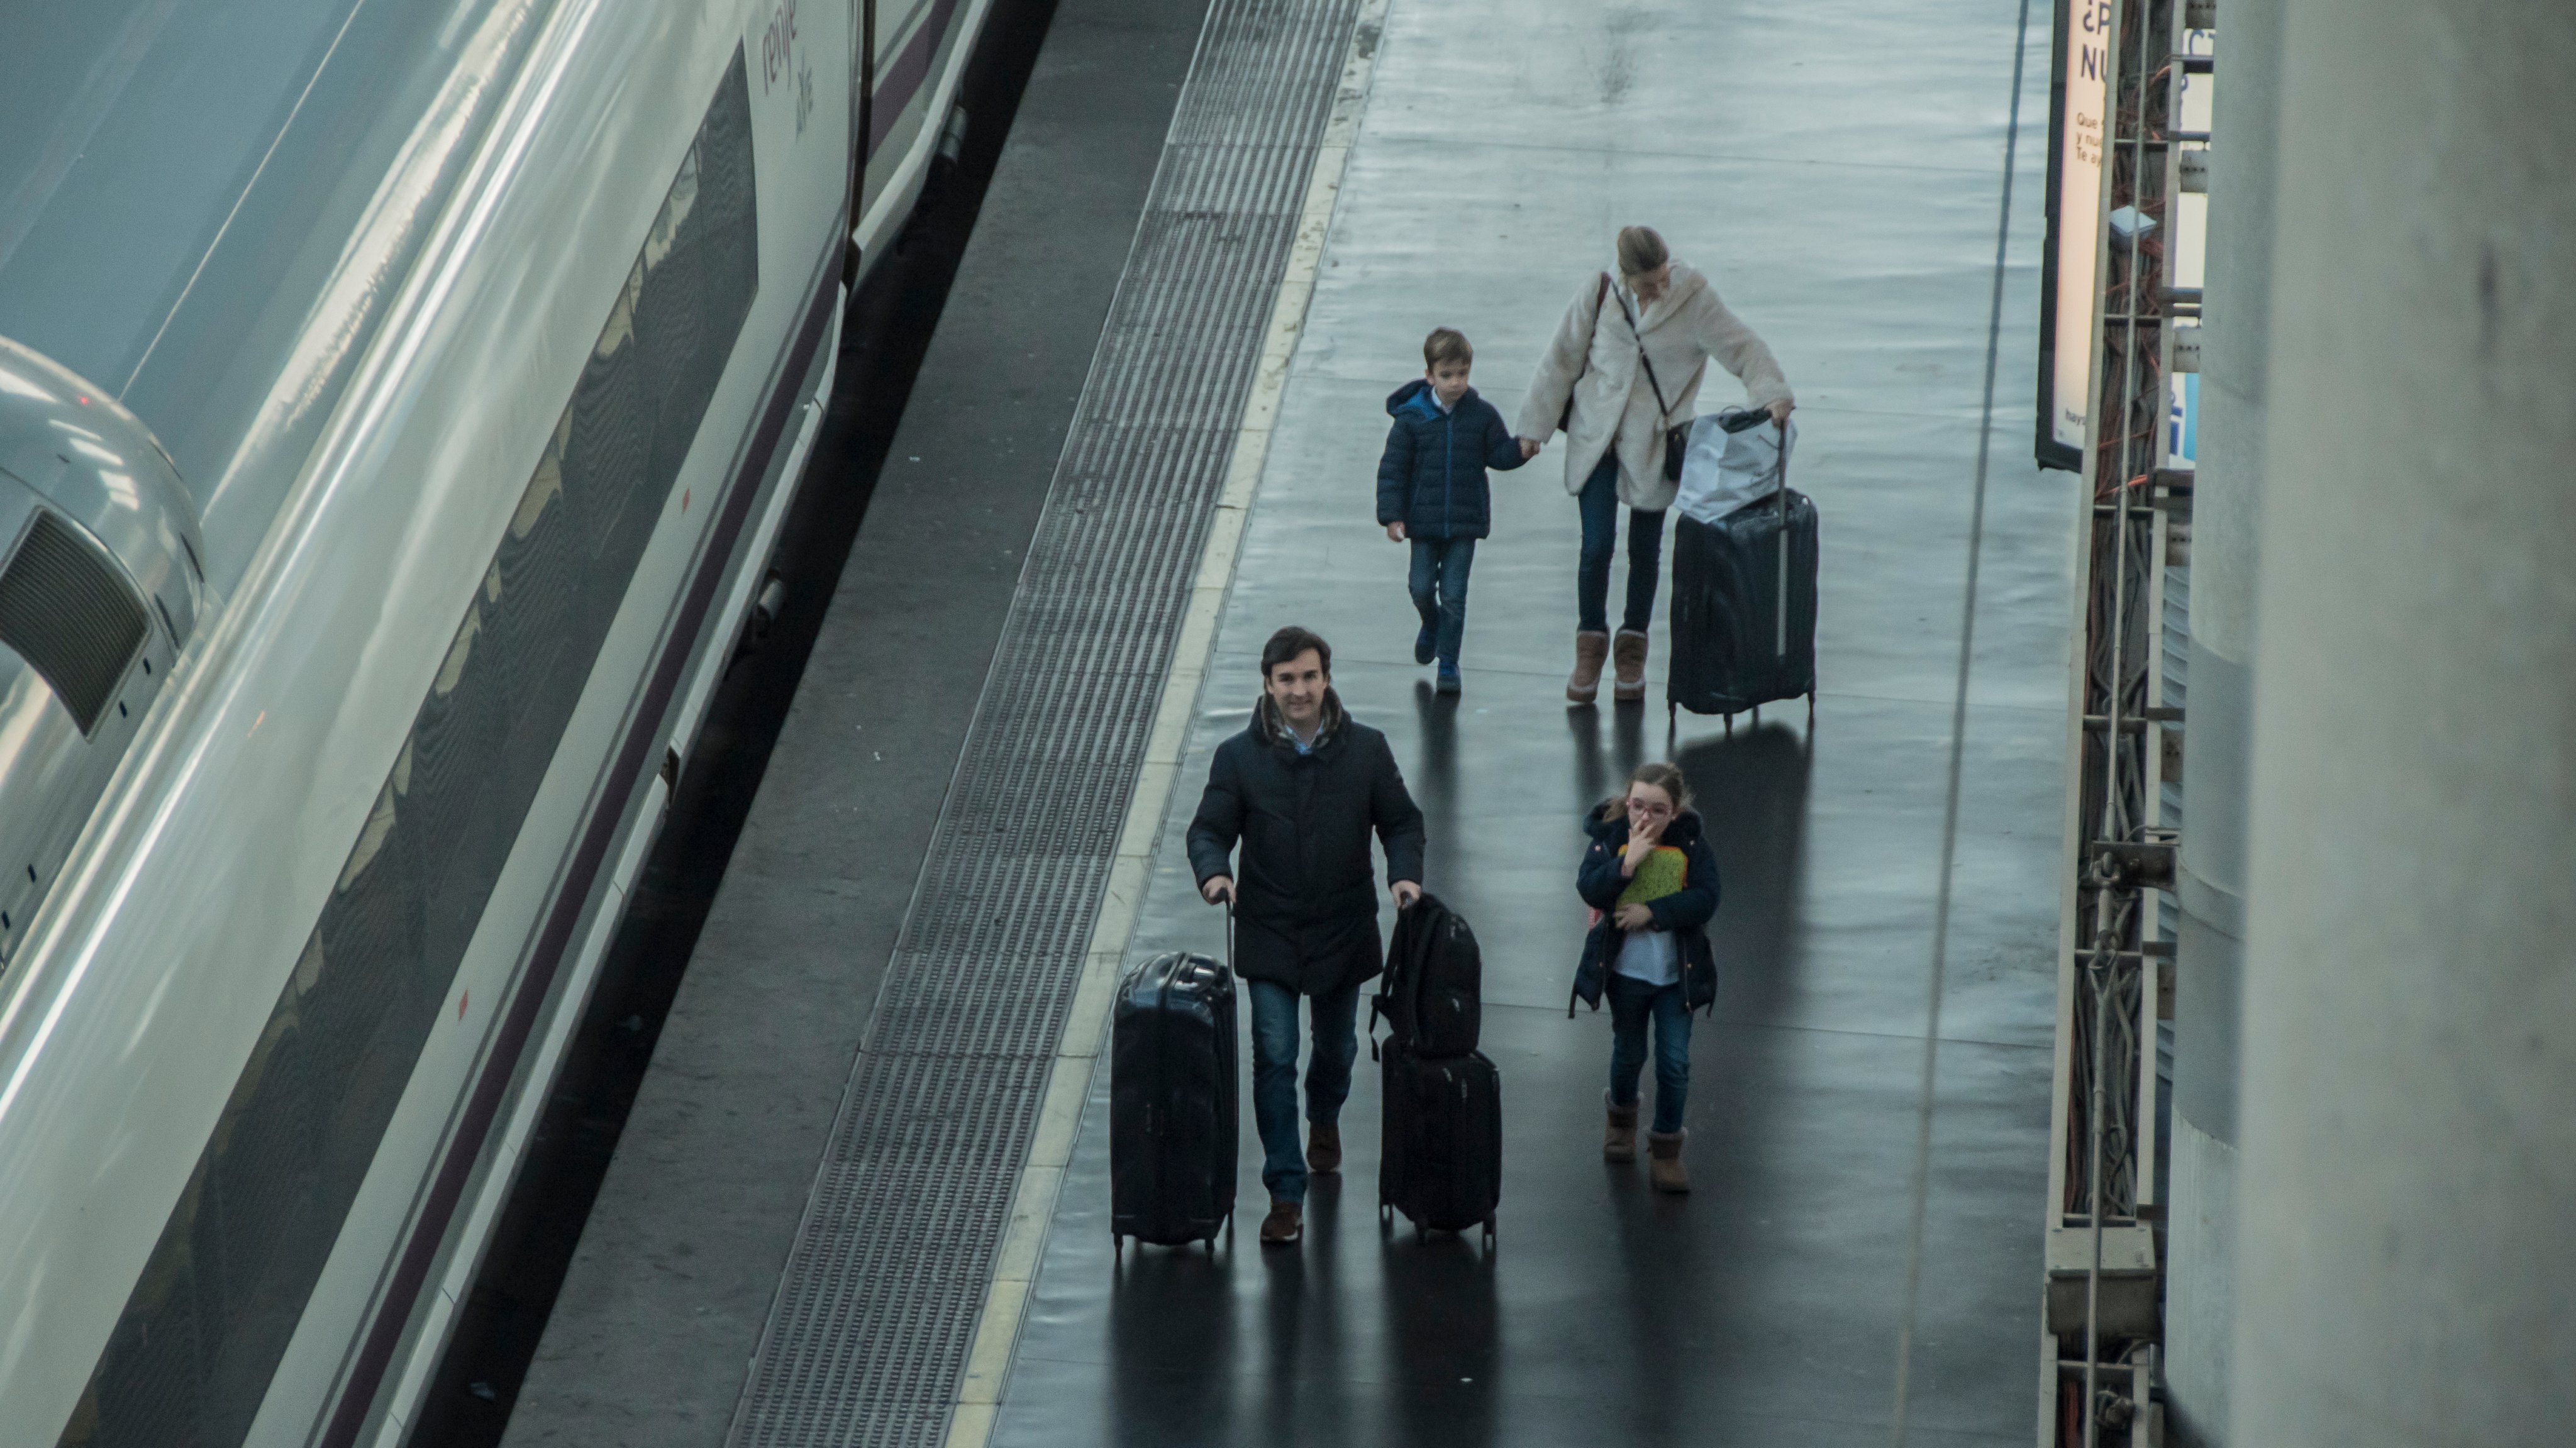 People seen walking through the Madrid Atocha Railway